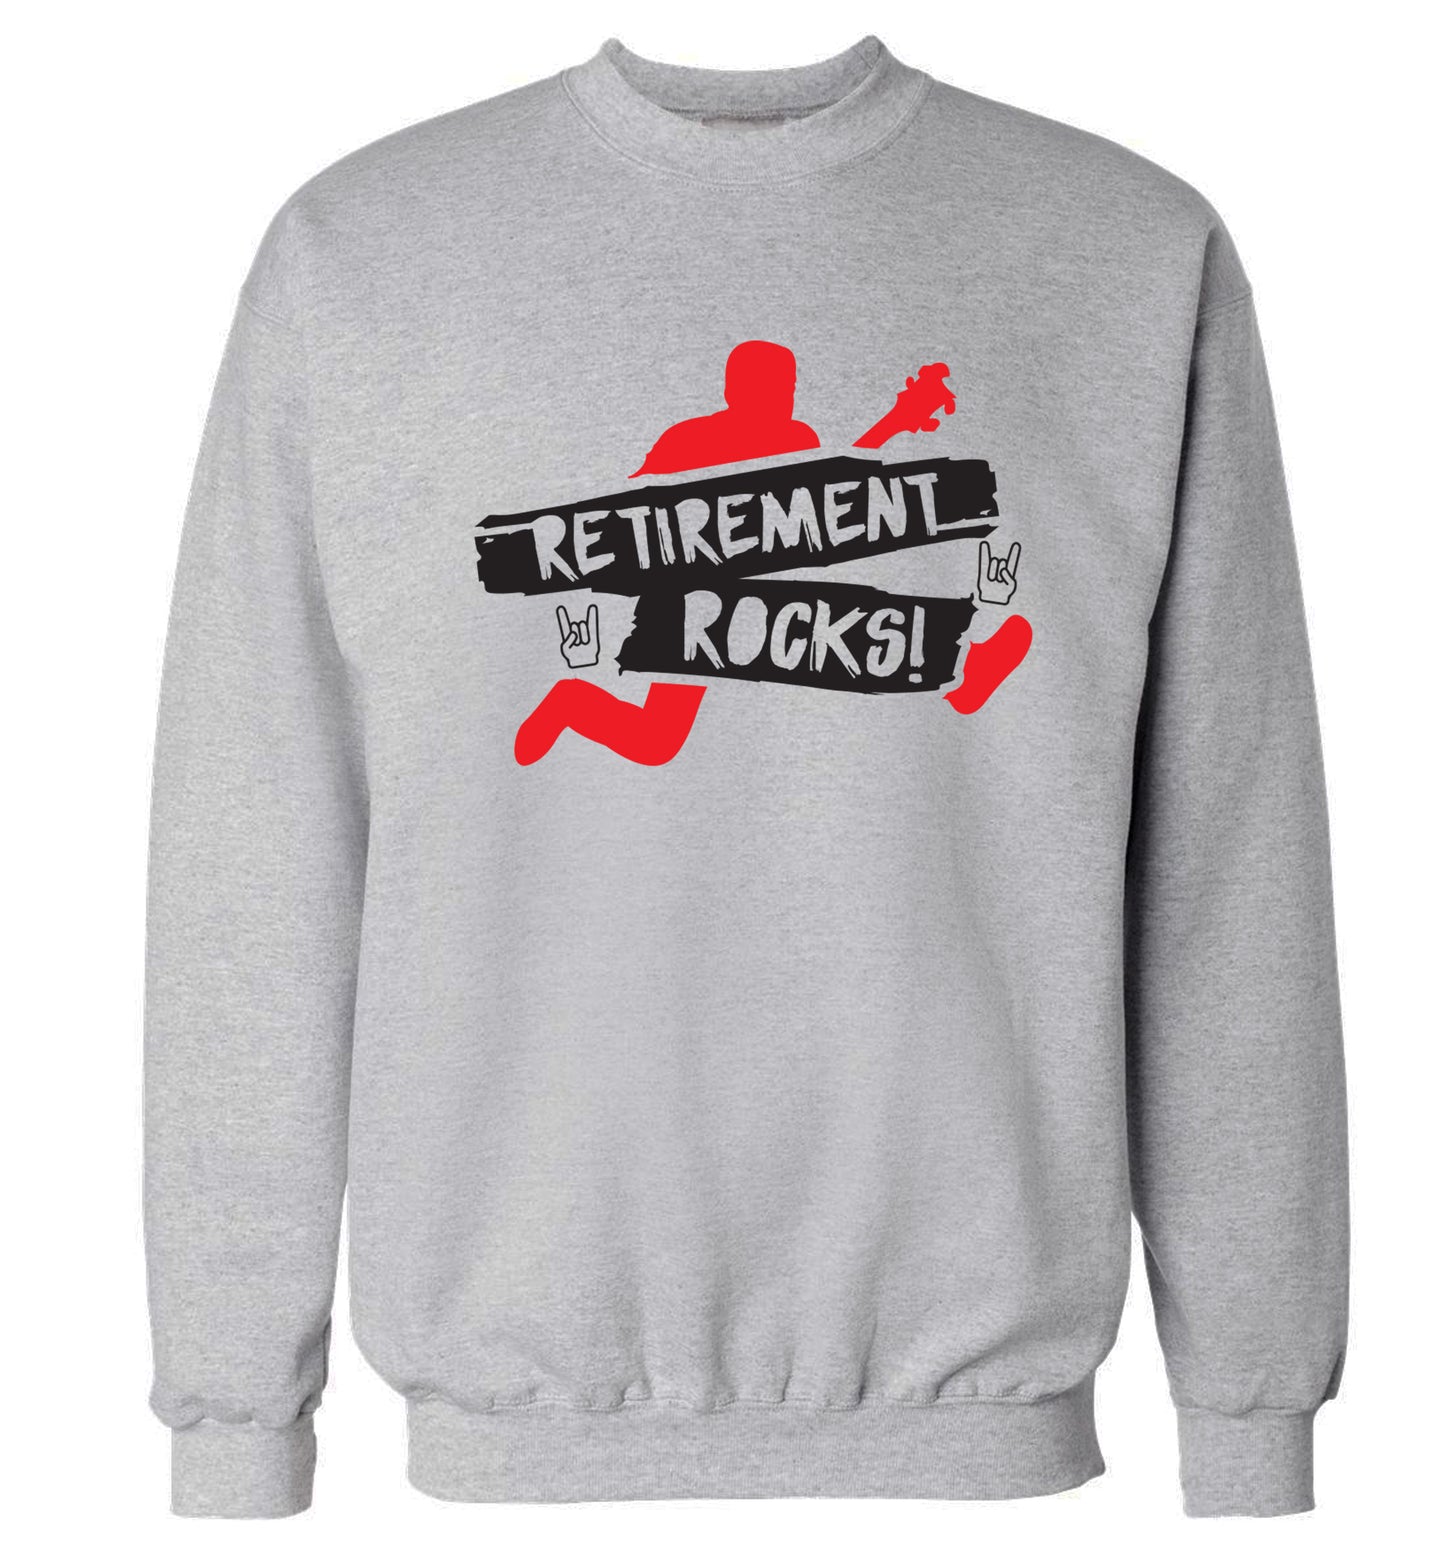 Retirement Rocks Adult's unisex grey Sweater 2XL